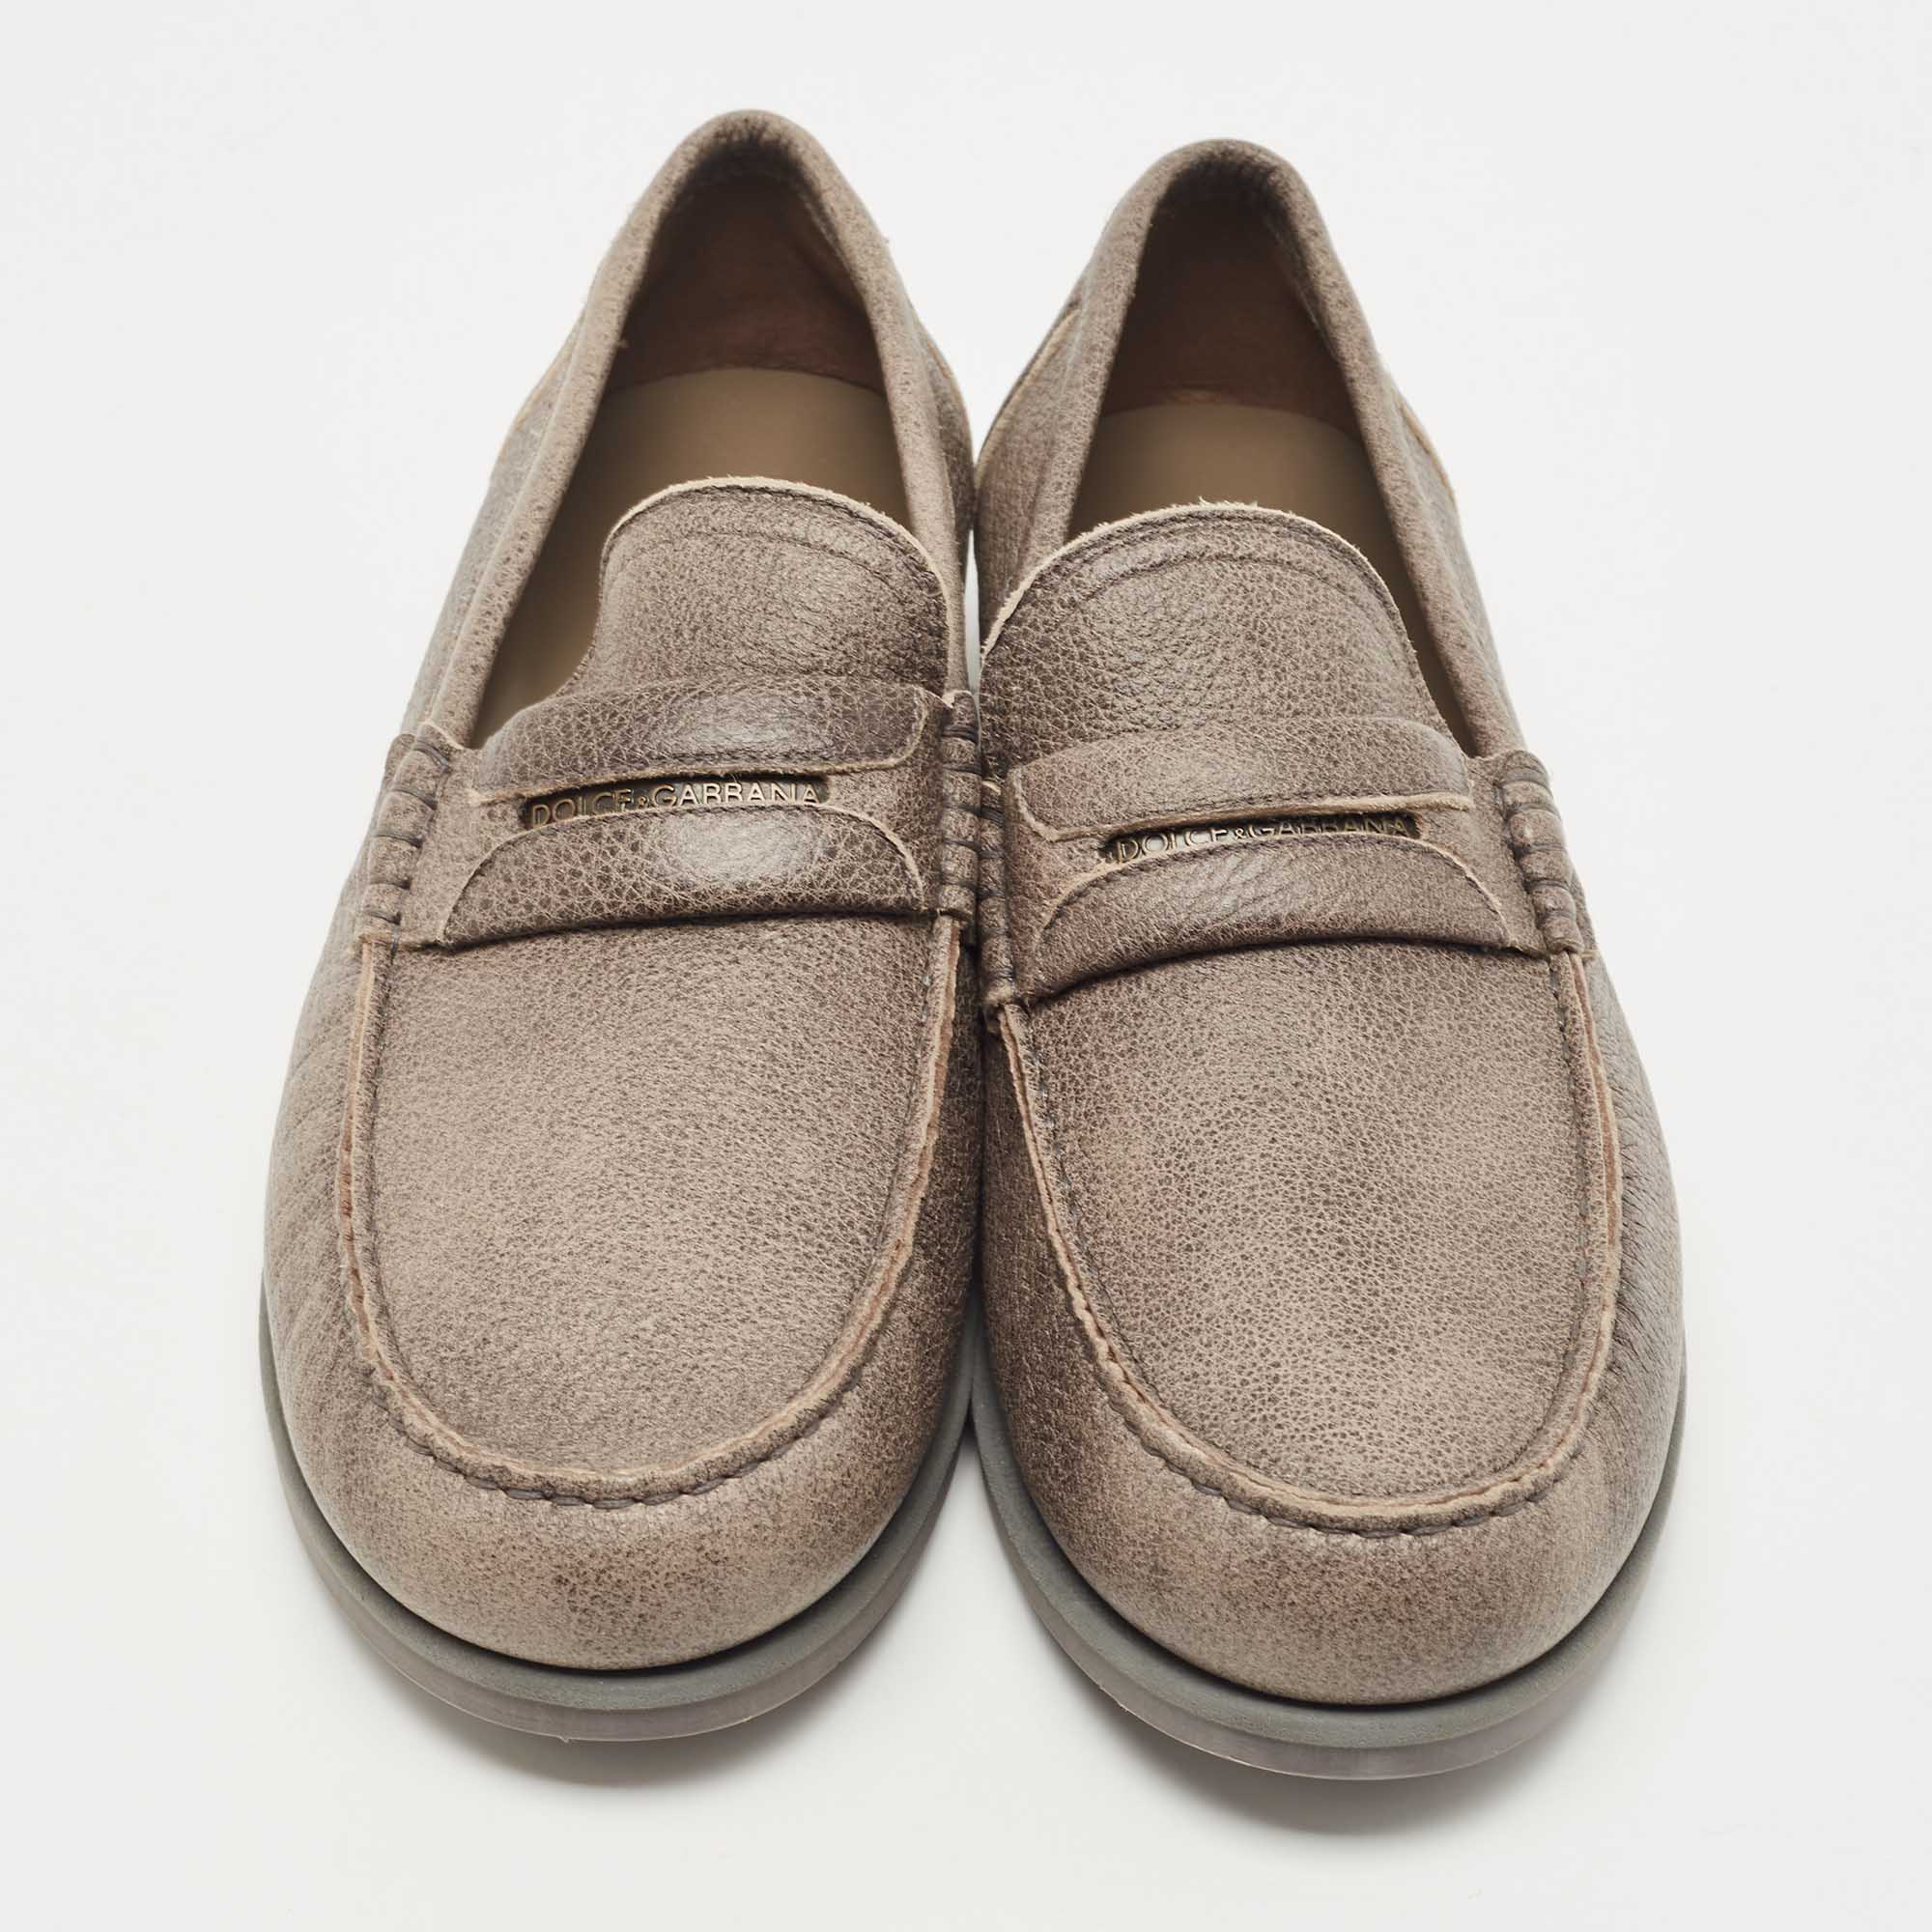 Dolce & Gabbana Grey Leather Penny Slip On Loafers Size 41.5